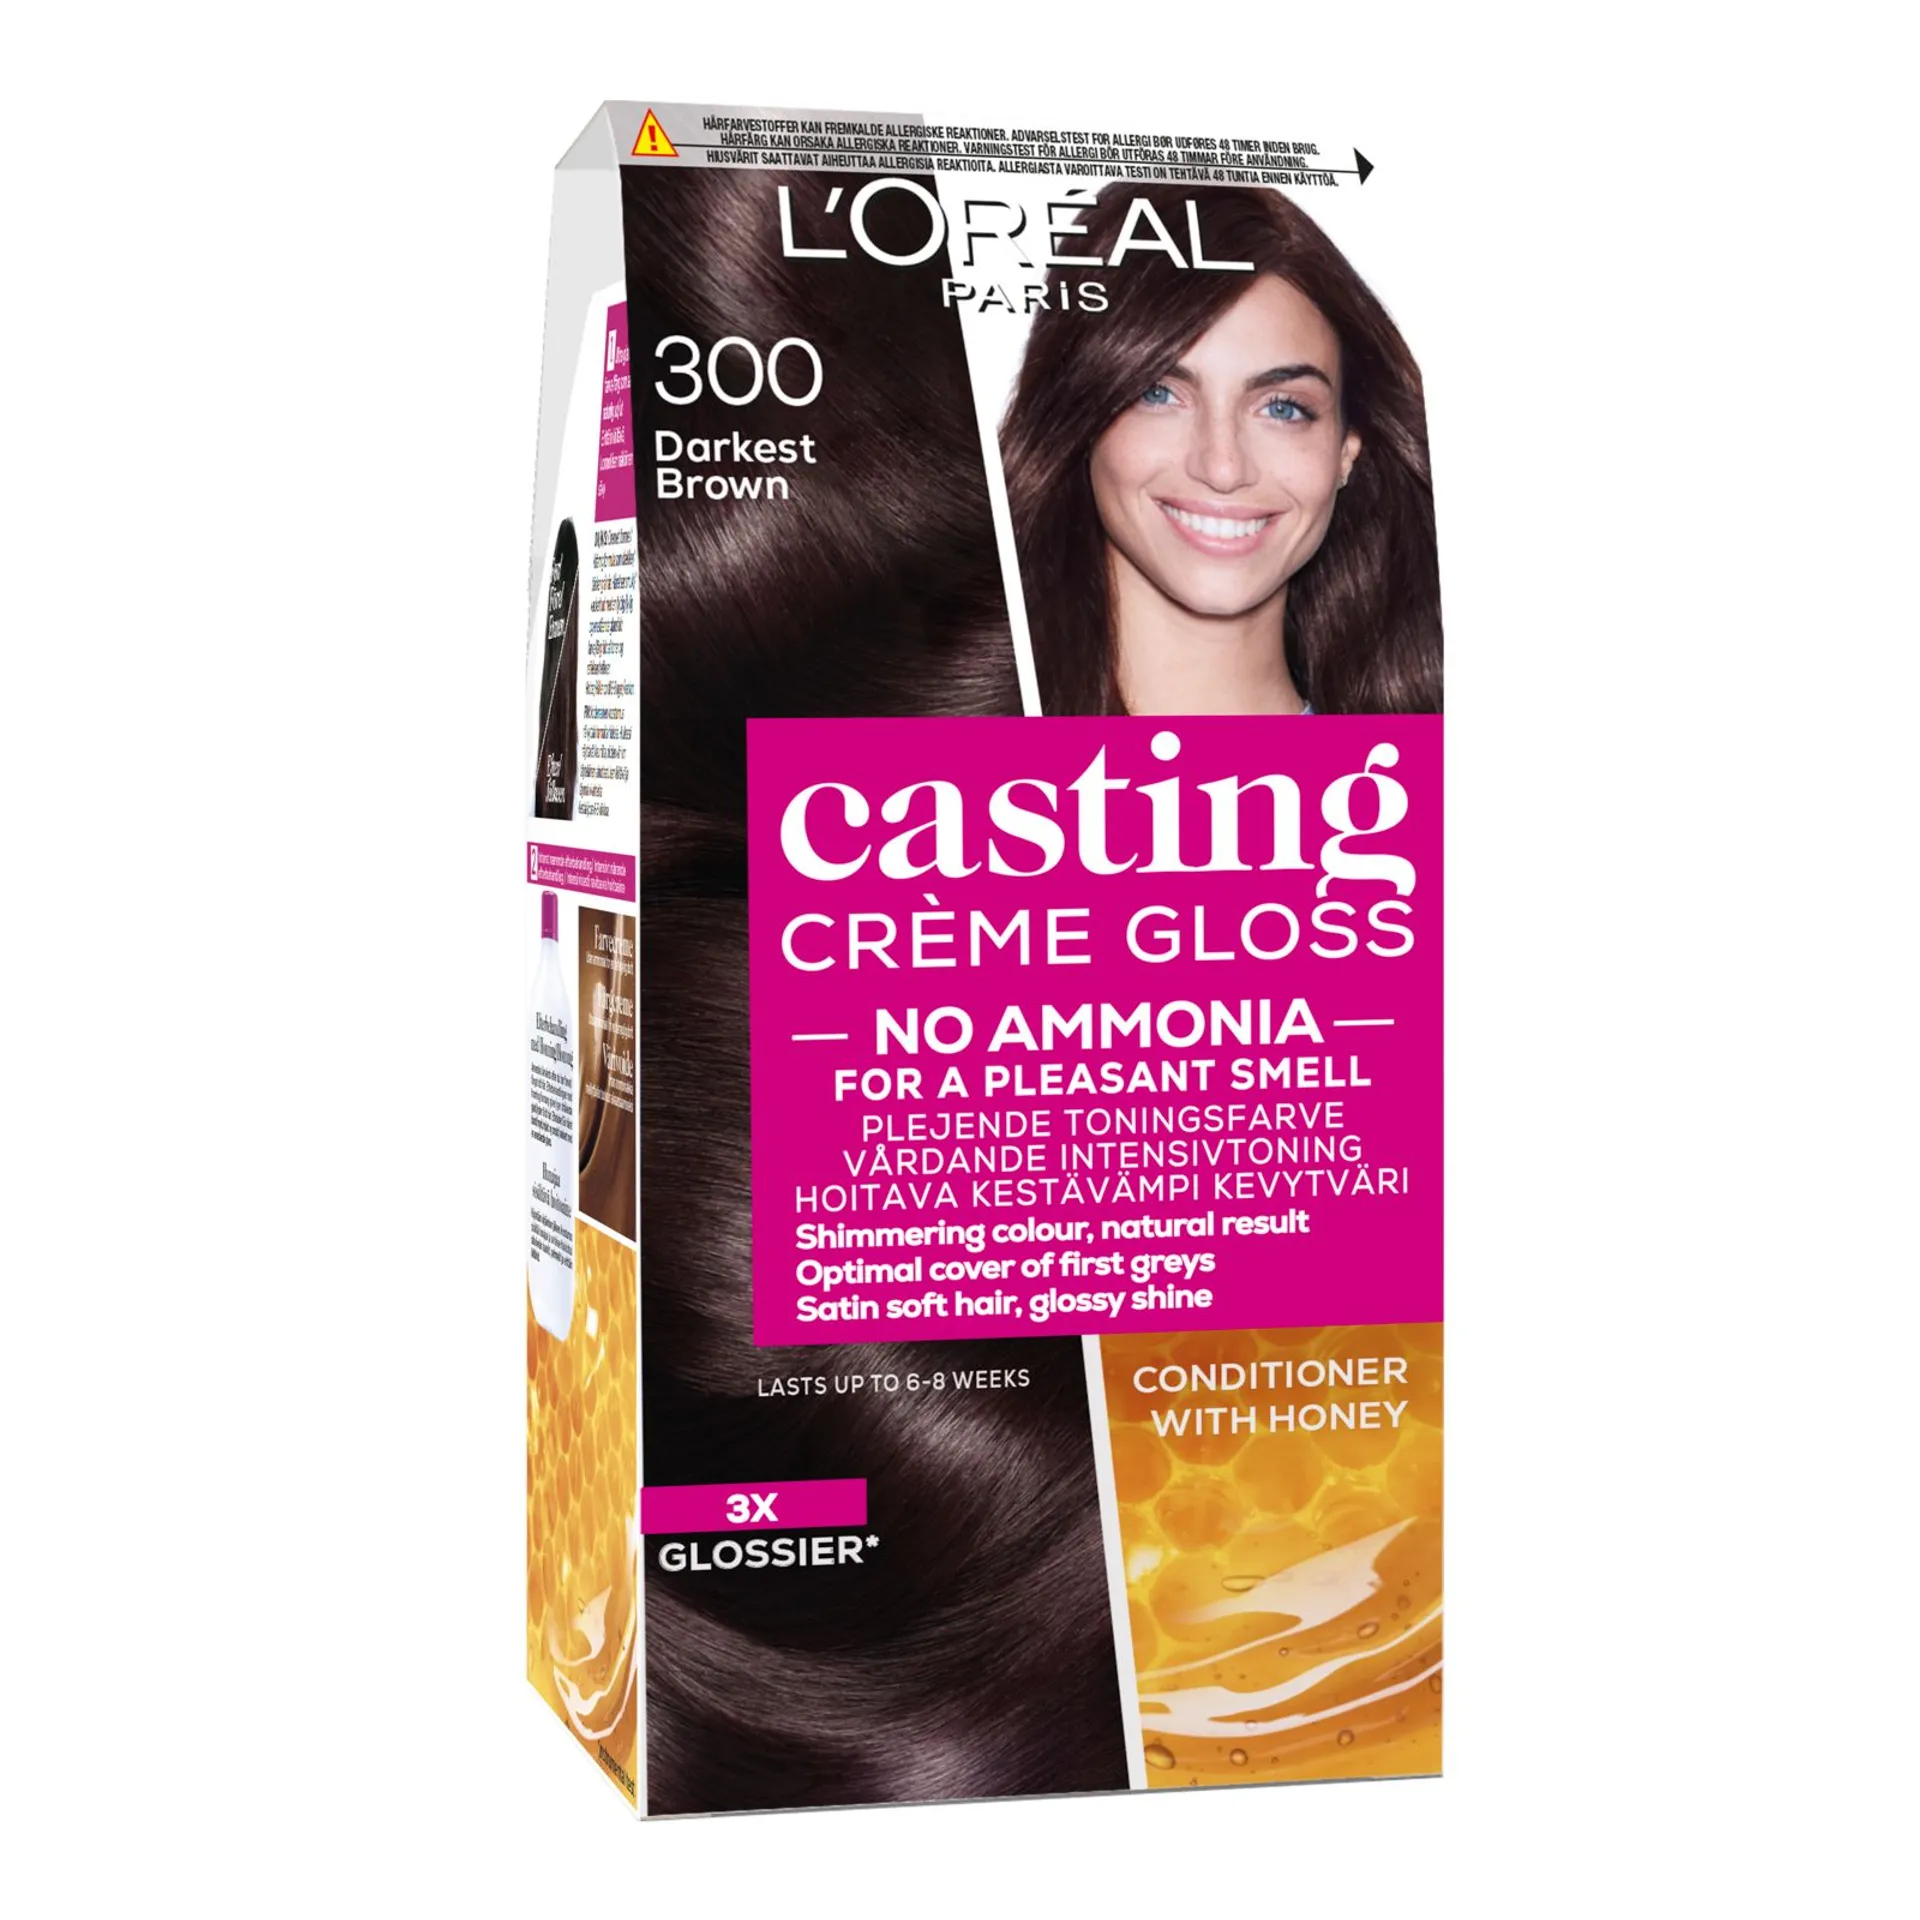 L'Oréal Paris Casting Crème Gloss 300 Darkest Brown Tummanruskea kevytväri 1kpl - 2